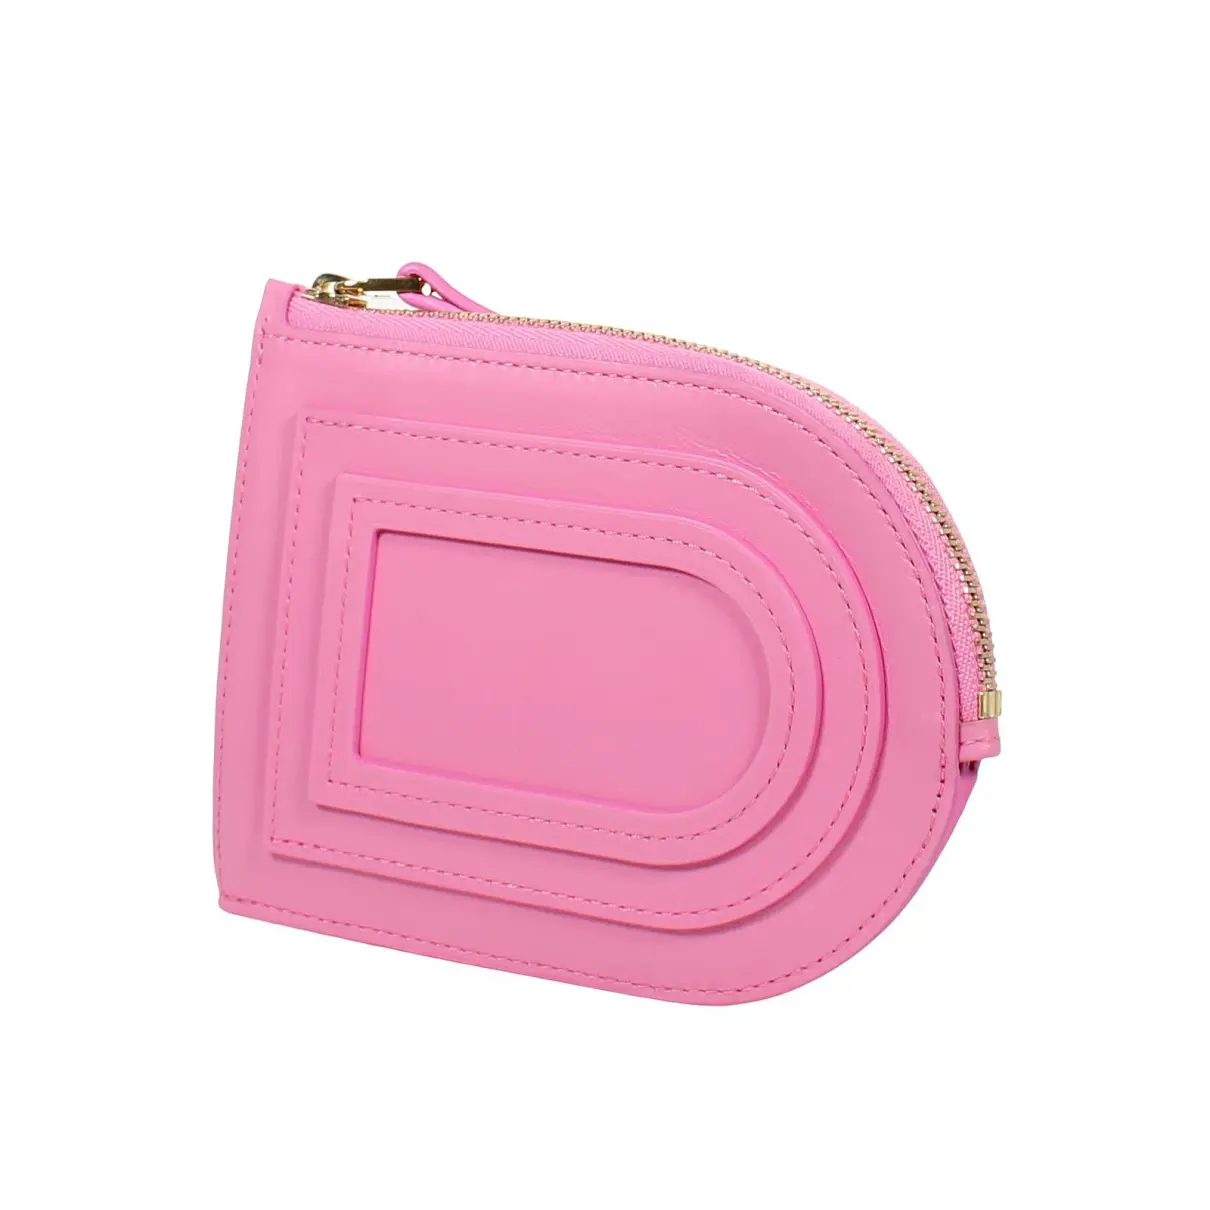 Buy Delvaux Leather purse online